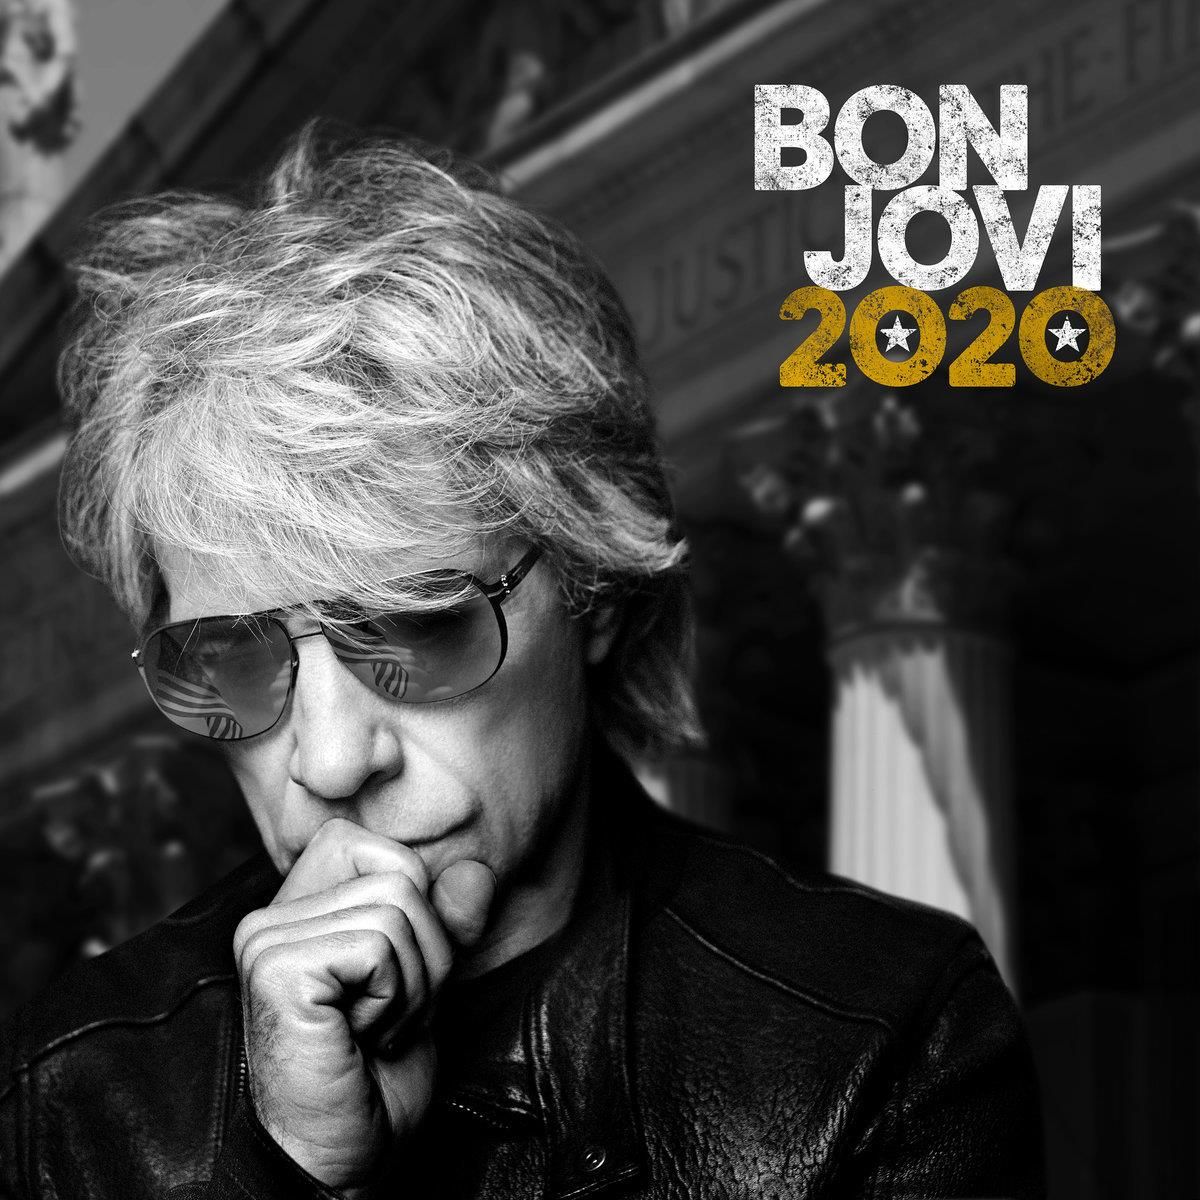 Płyta kompaktowa Bon Jovi Bon Jovi 2020 [CD] Ceny i opinie Ceneo.pl